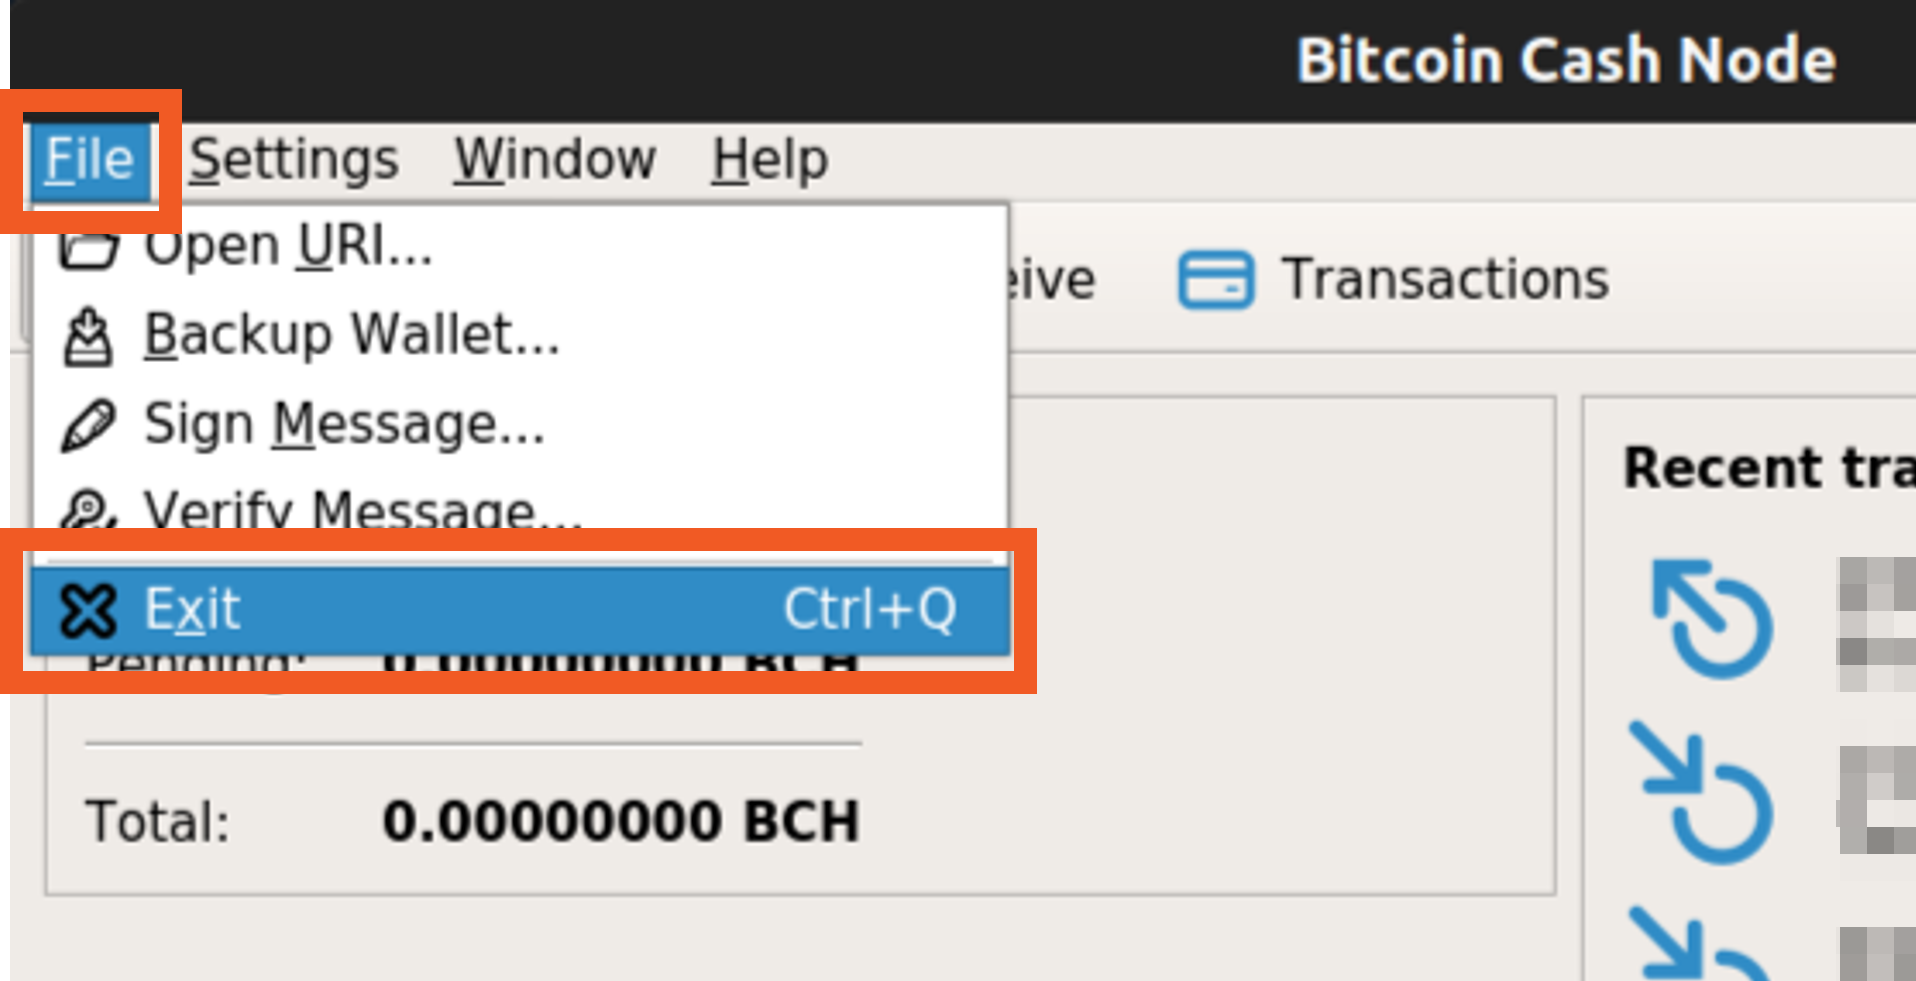 GUI - Close Bitcoin Cash